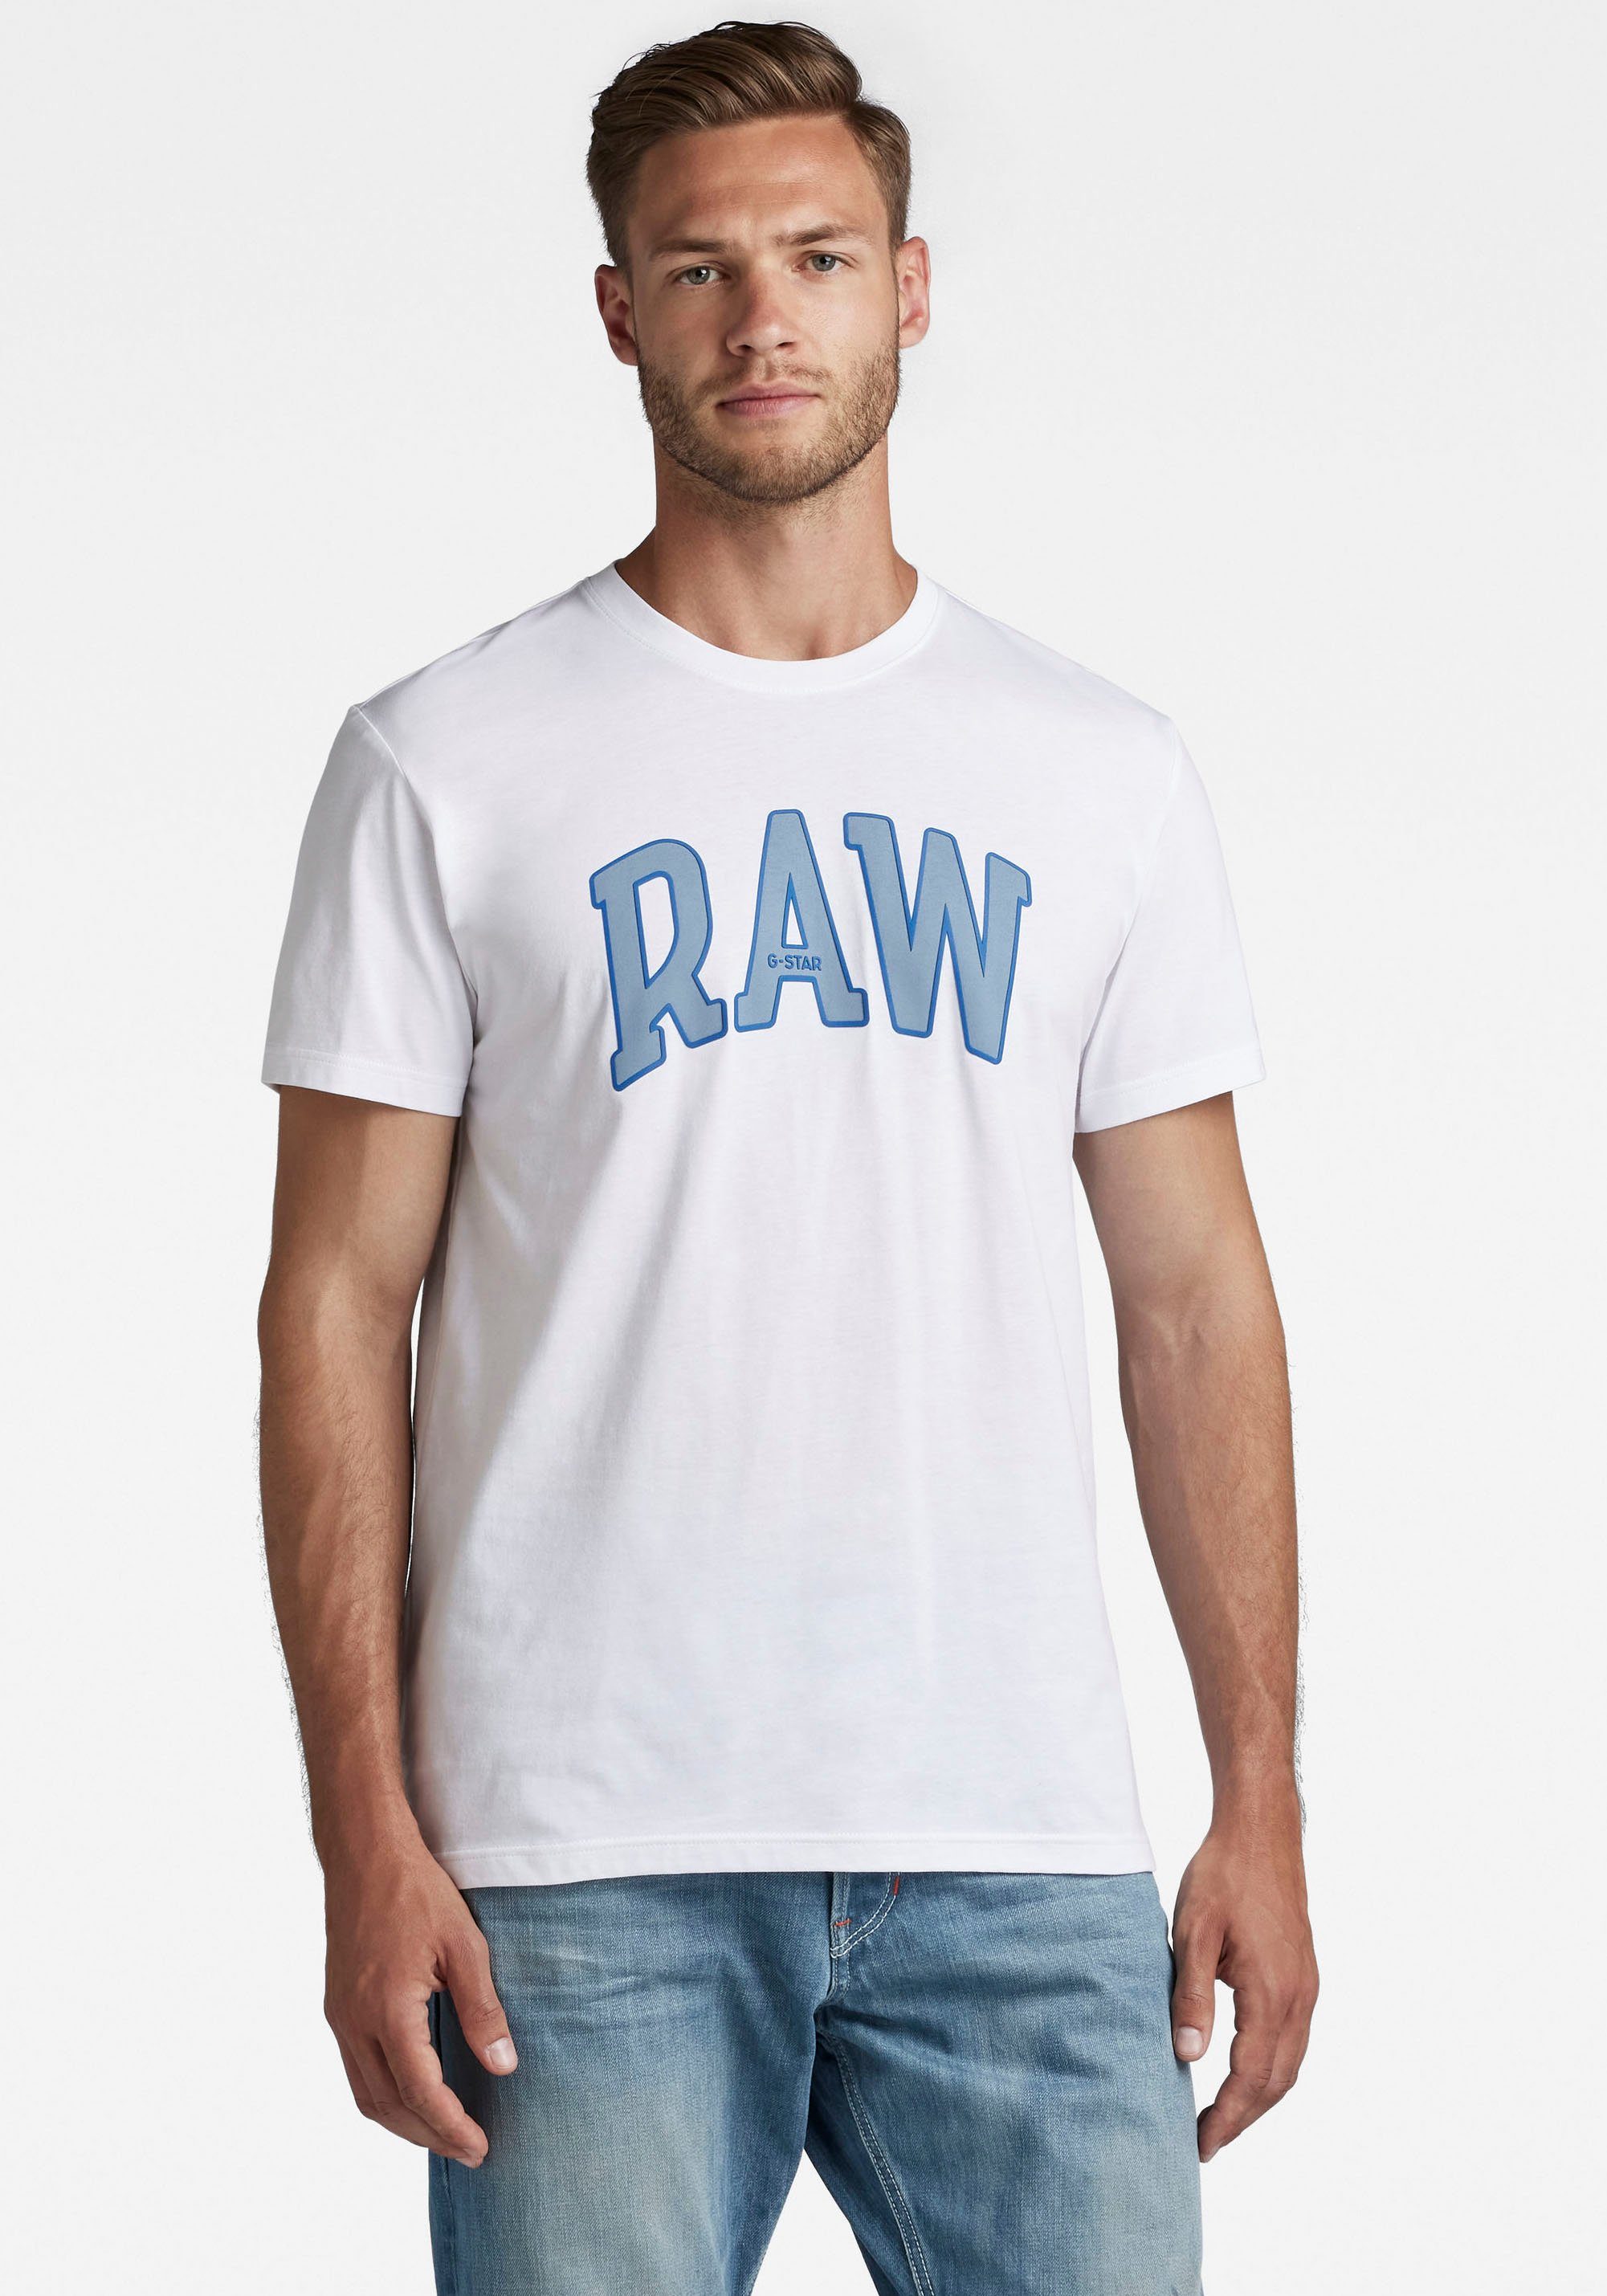 cassette regenval Kennis maken G-Star RAW T-shirt University vind je bij | OTTO